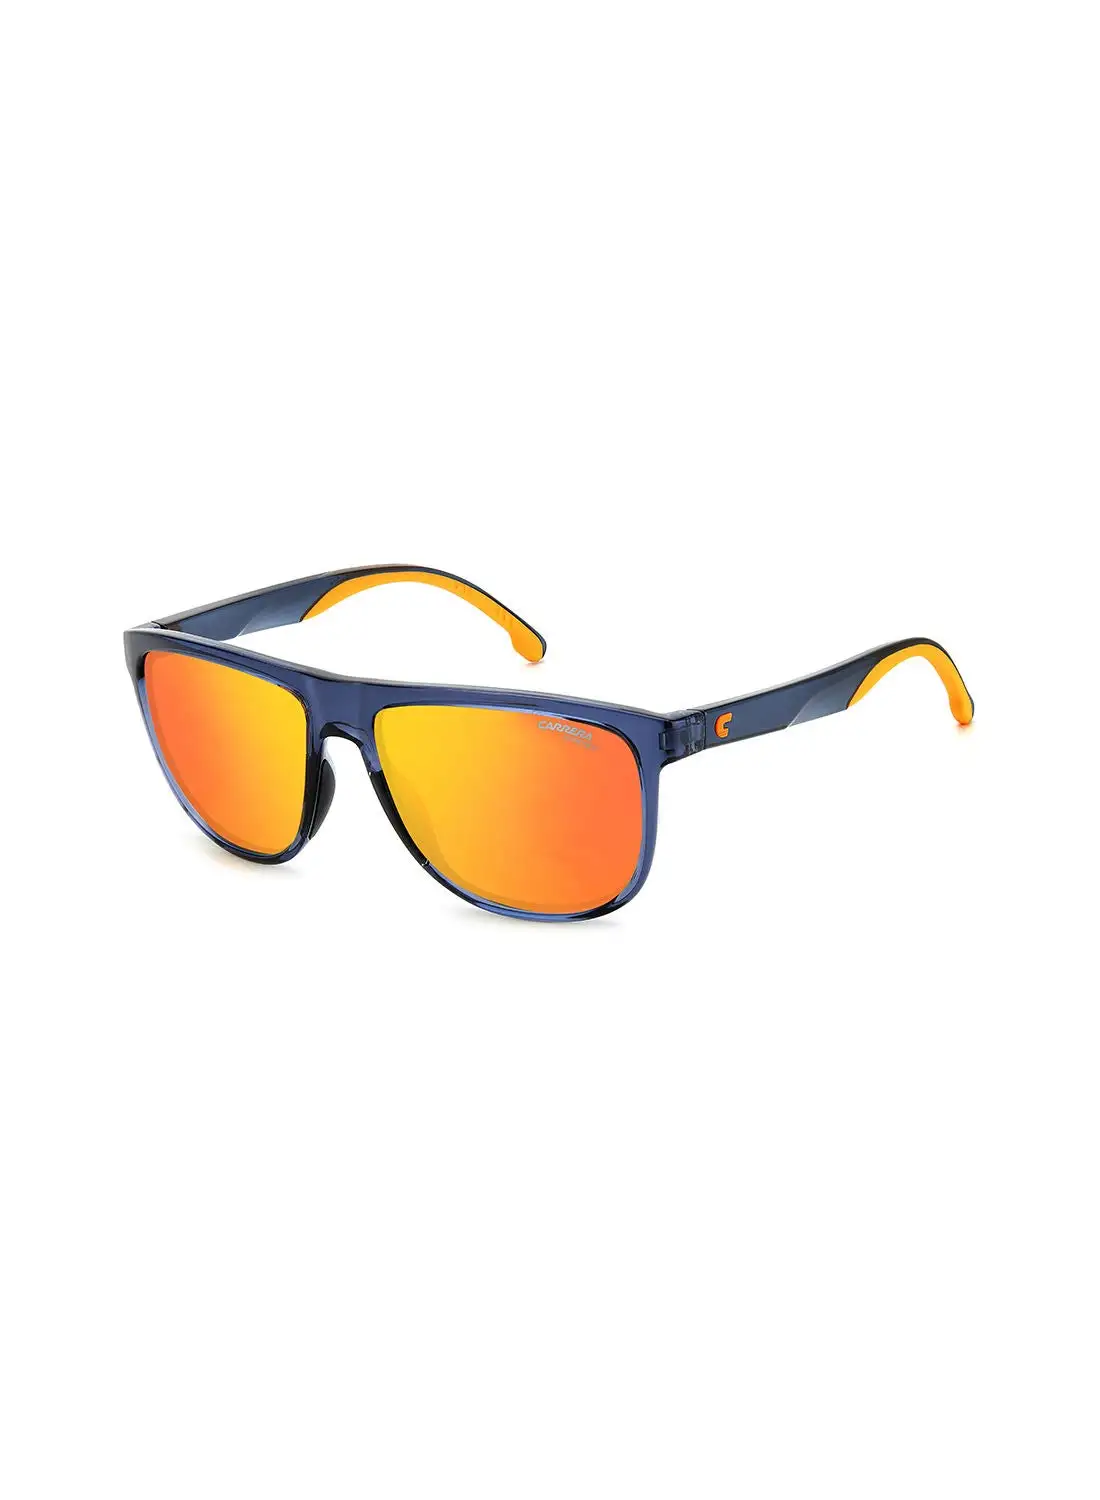 Carrera Men's UV Protection Sunglasses - Carrera 8059/S Blue/Orange 58 - Lens Size: 58 Mm